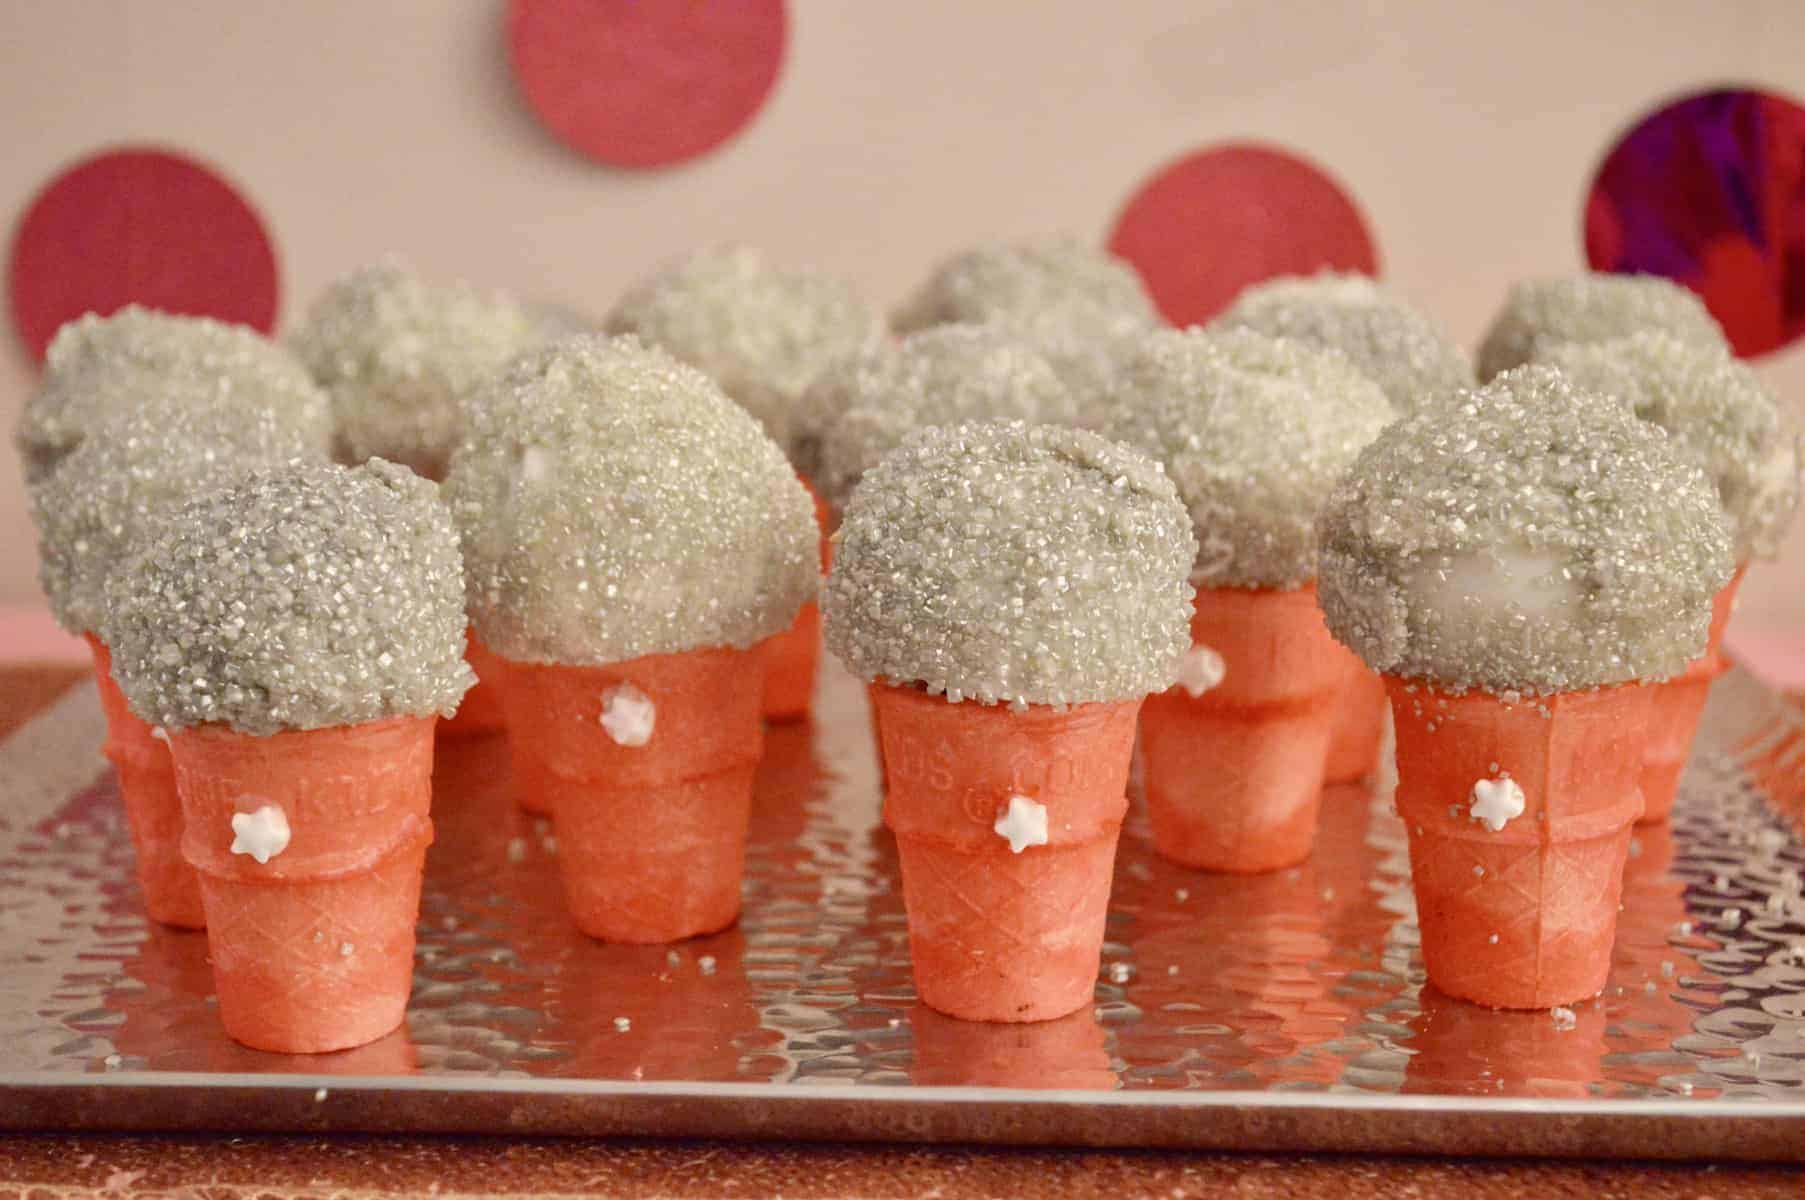 microphone cupcake cones